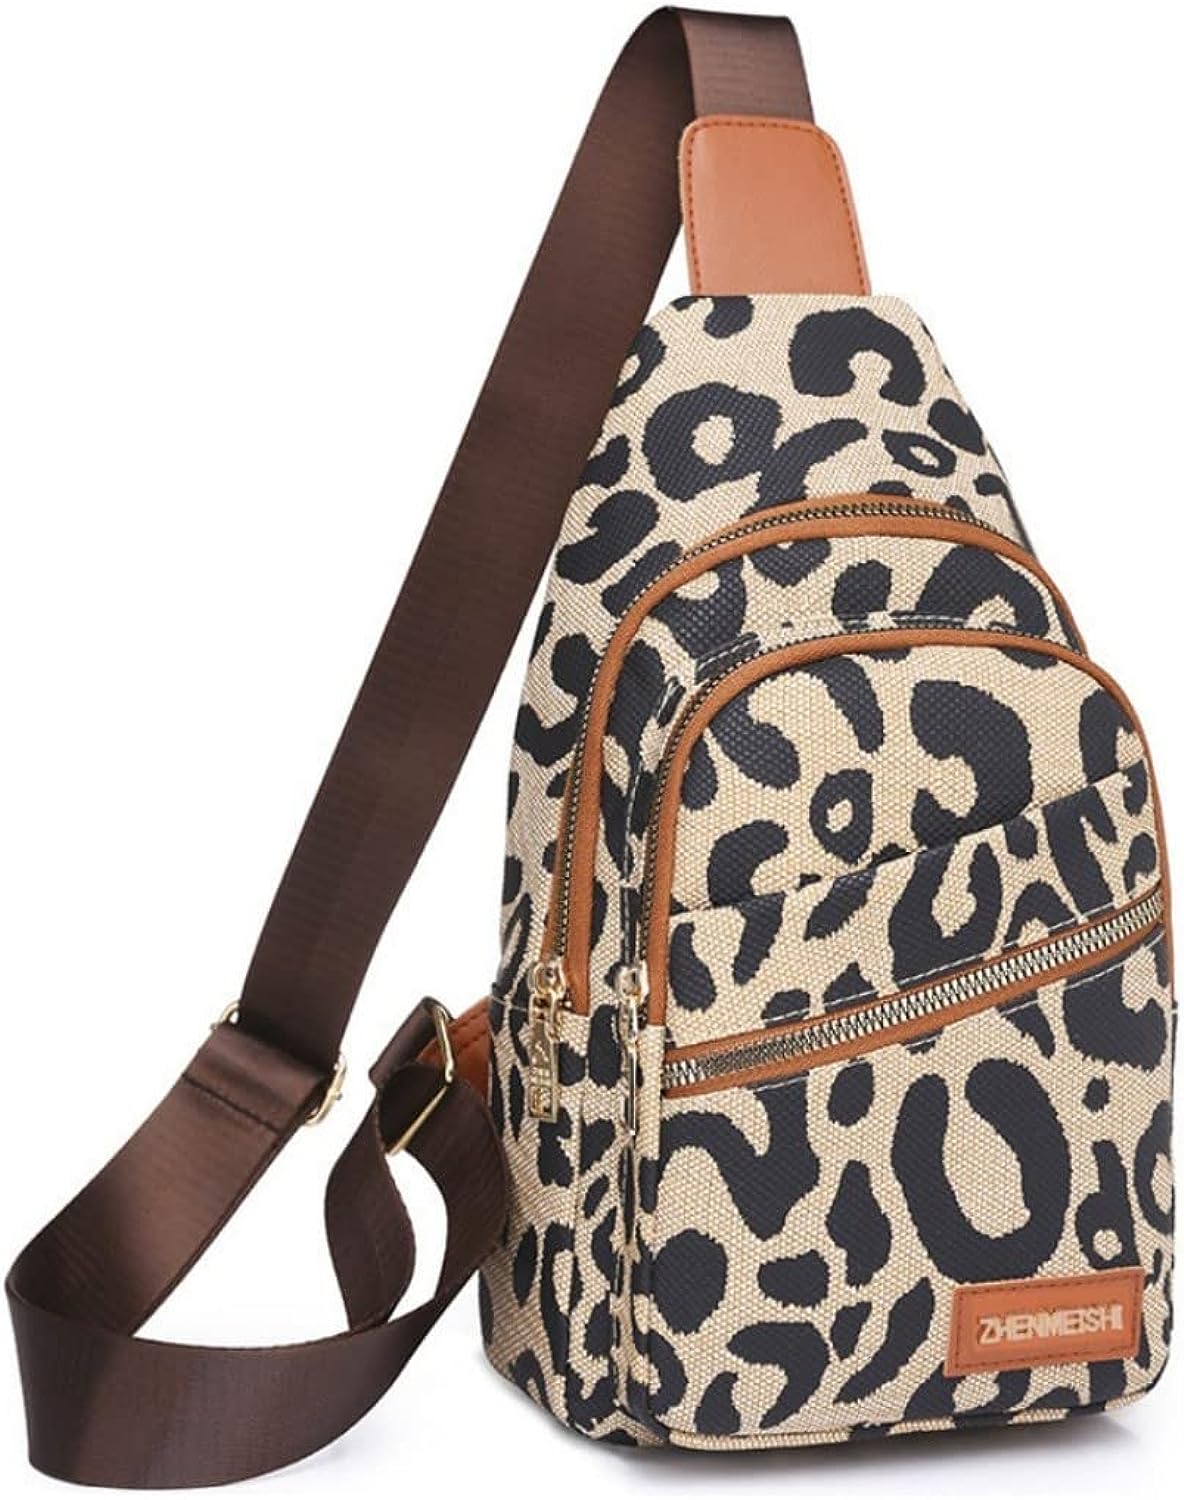 Hiriotin Leopard Print Chest Bag Review - Go Girl Bags